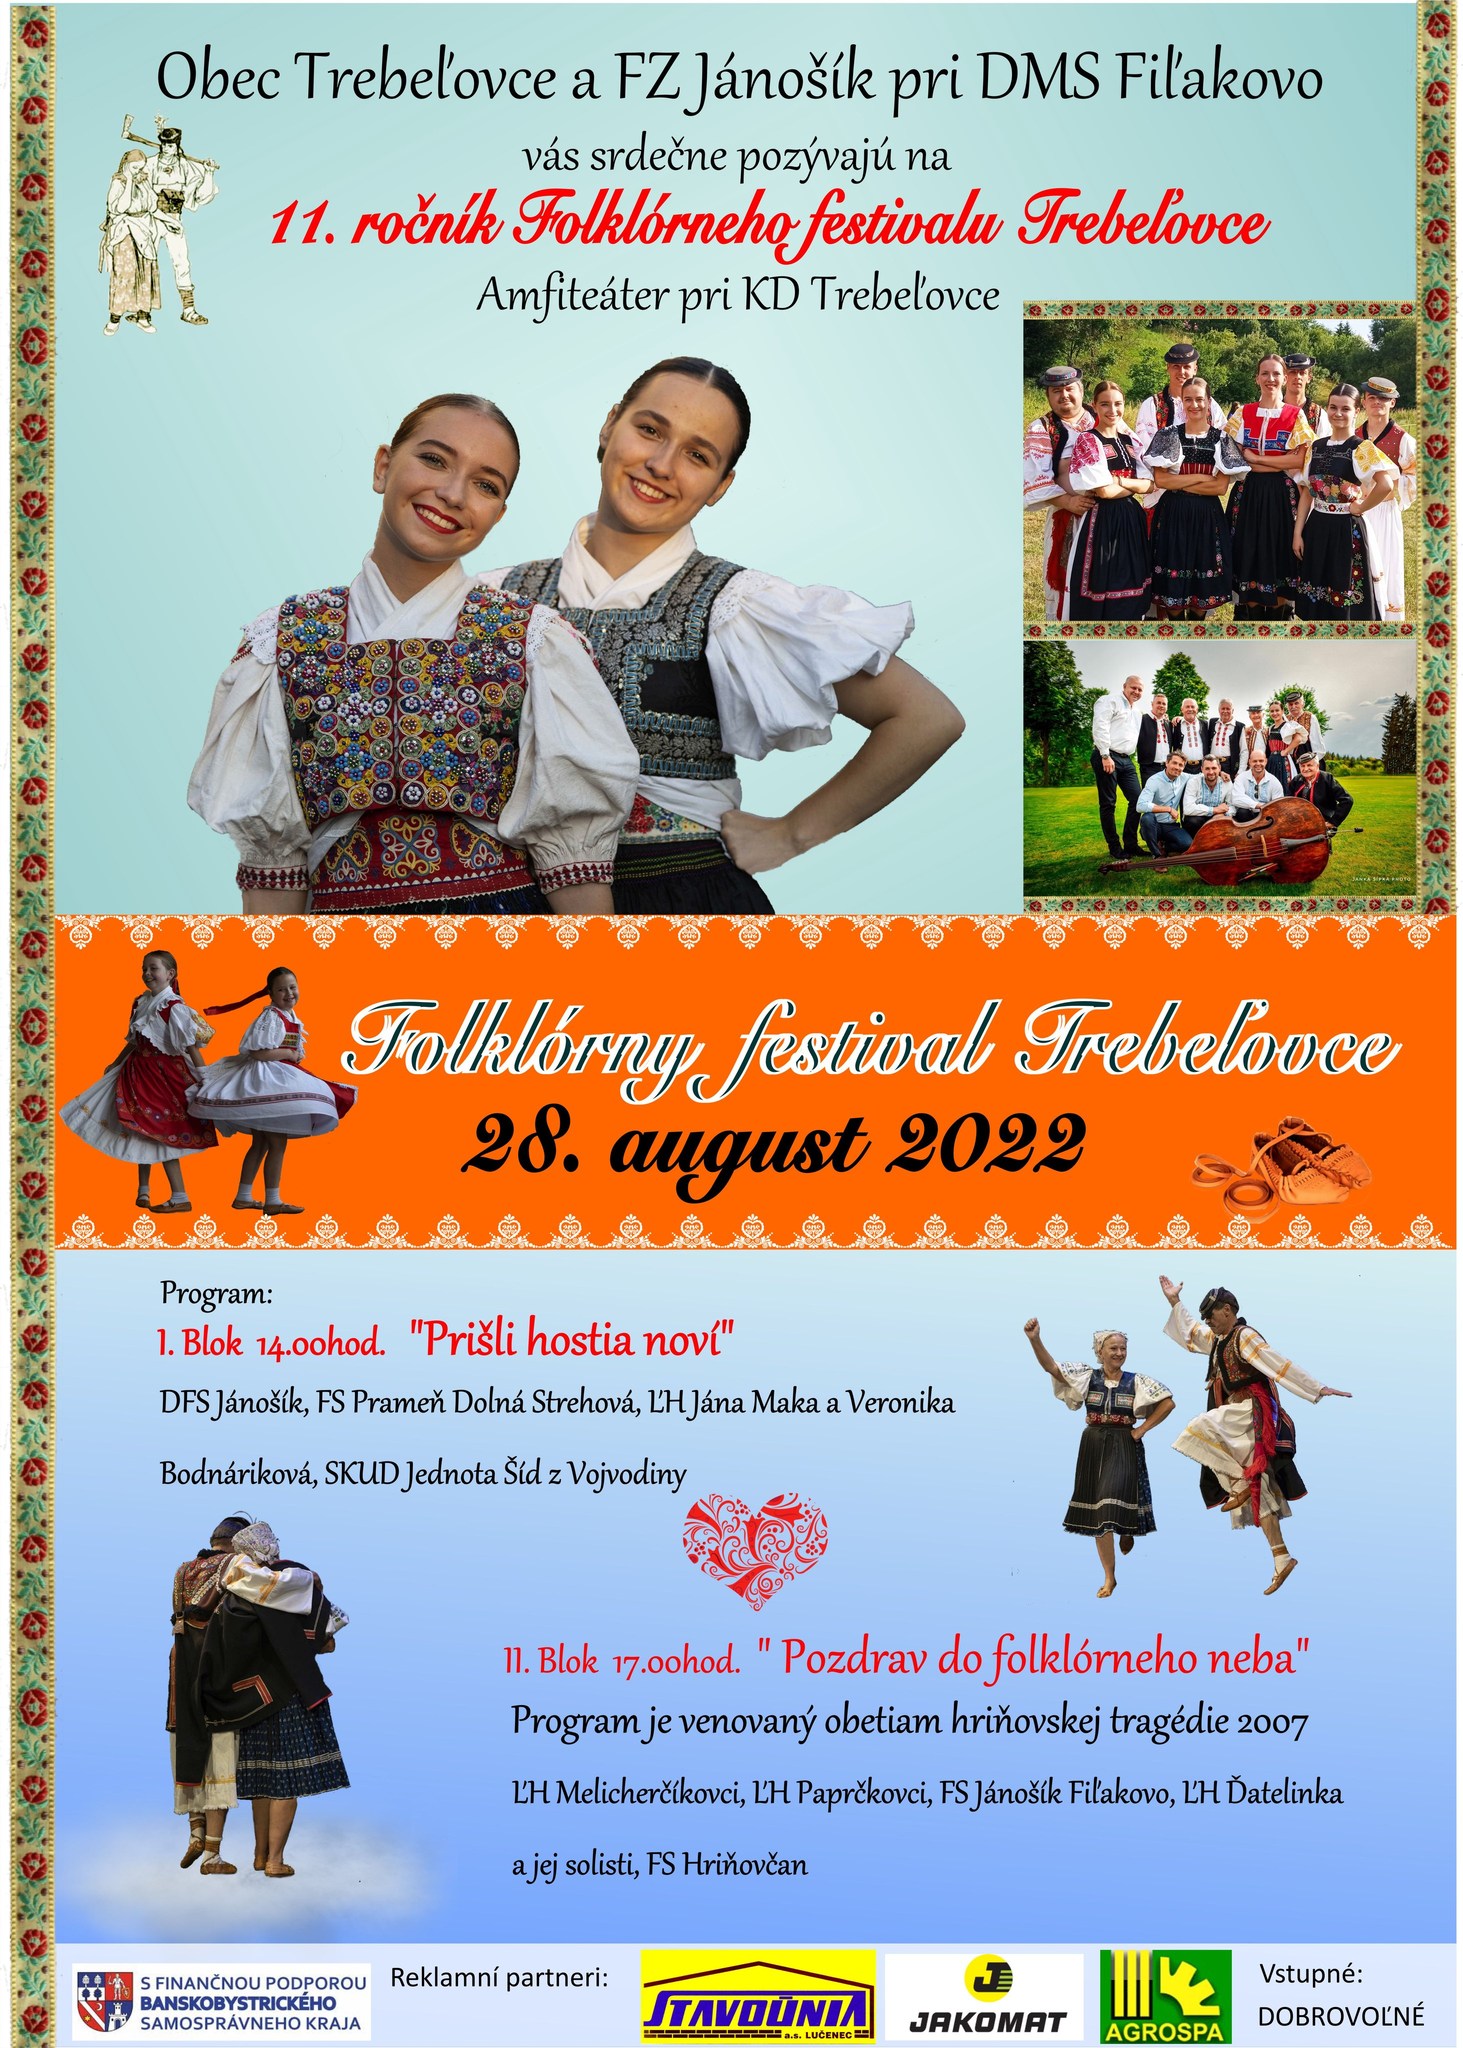 Folklrny festival Trebeovce 2022 - 11. ronk